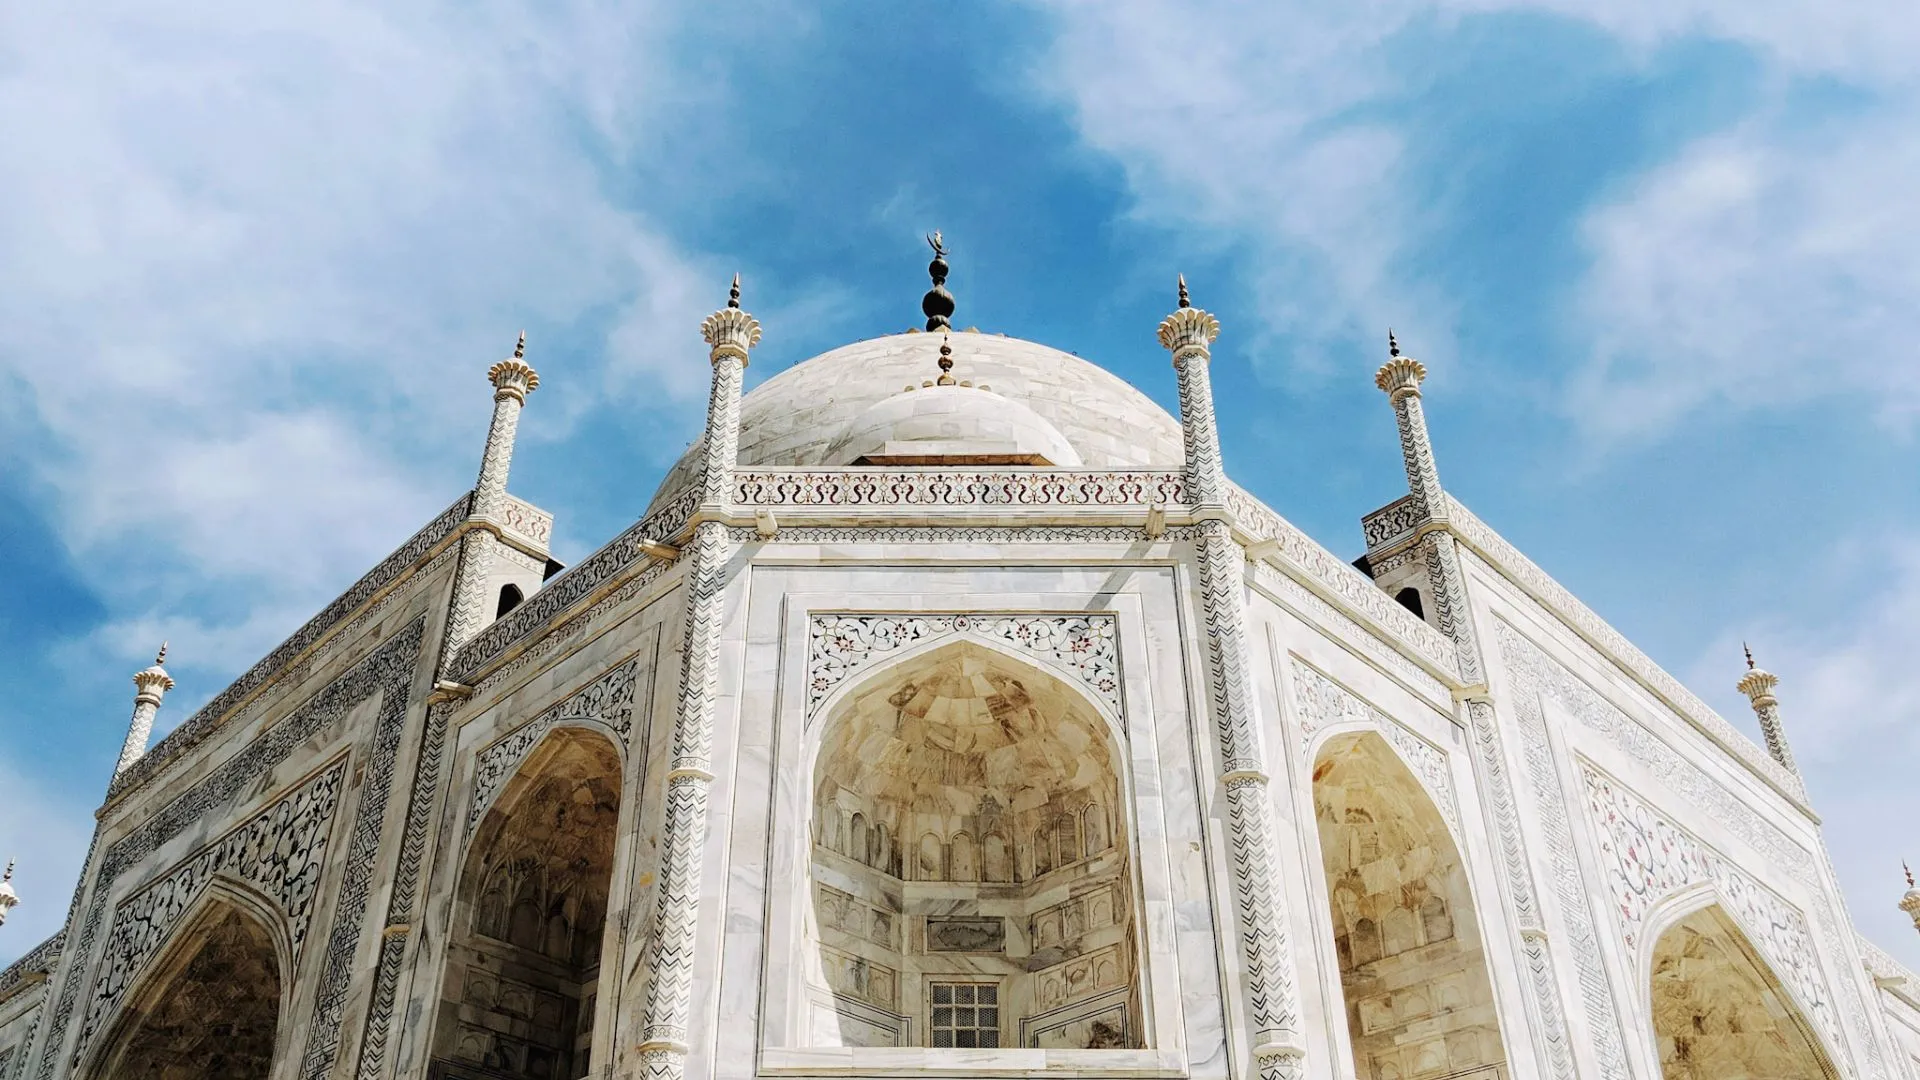 Myth of the marbles of Taj mahal